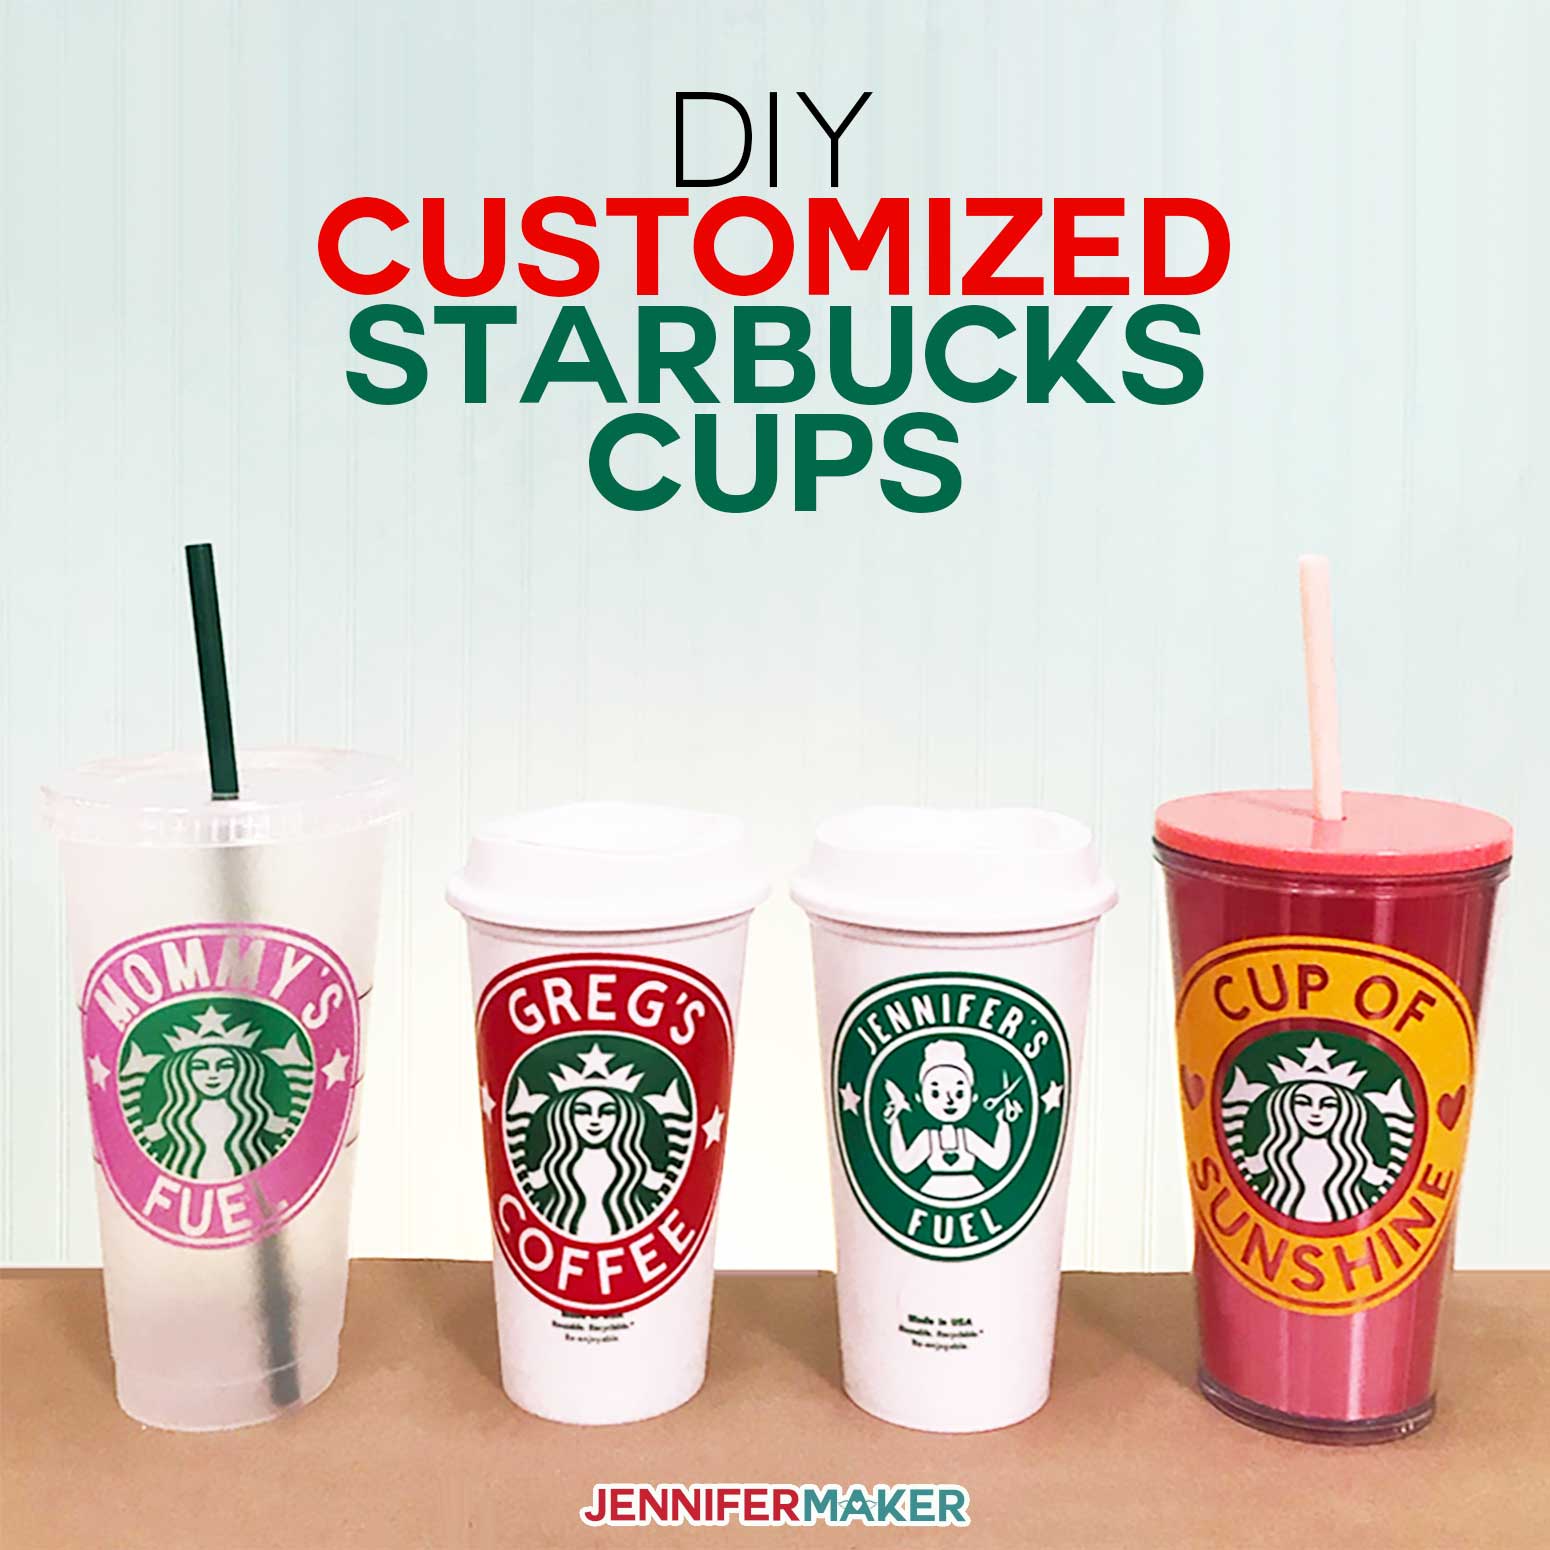 DIY Customized Starbucks Cups Decal made with a Cricut #starbucks #coffee #cricut